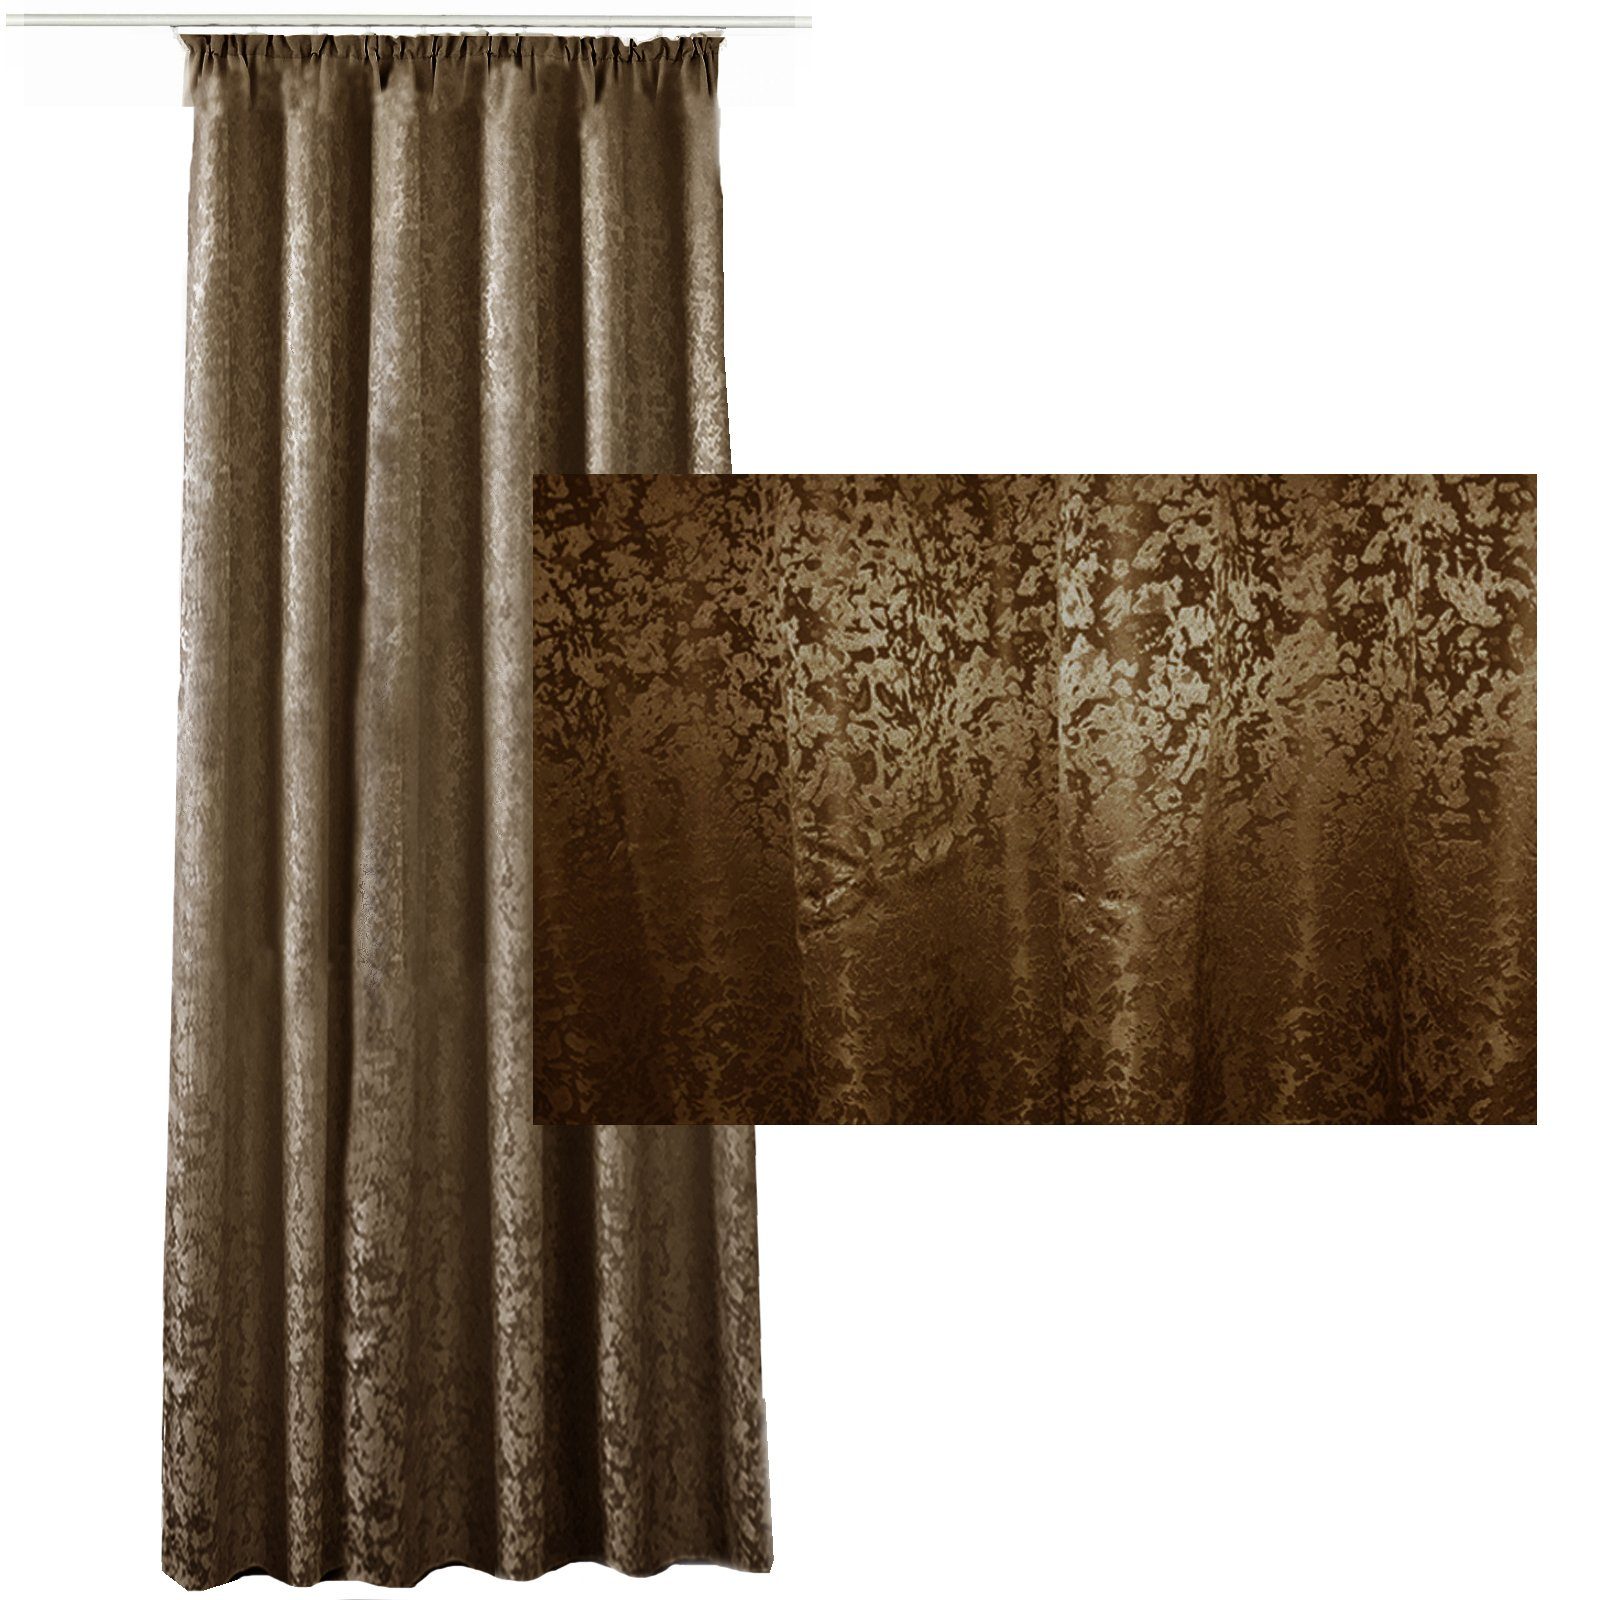 Vorhang Blickdichter Vorhang 140x245cm, lang, braun schimmernd, Kräuselband, JEMIDI | Fertiggardinen